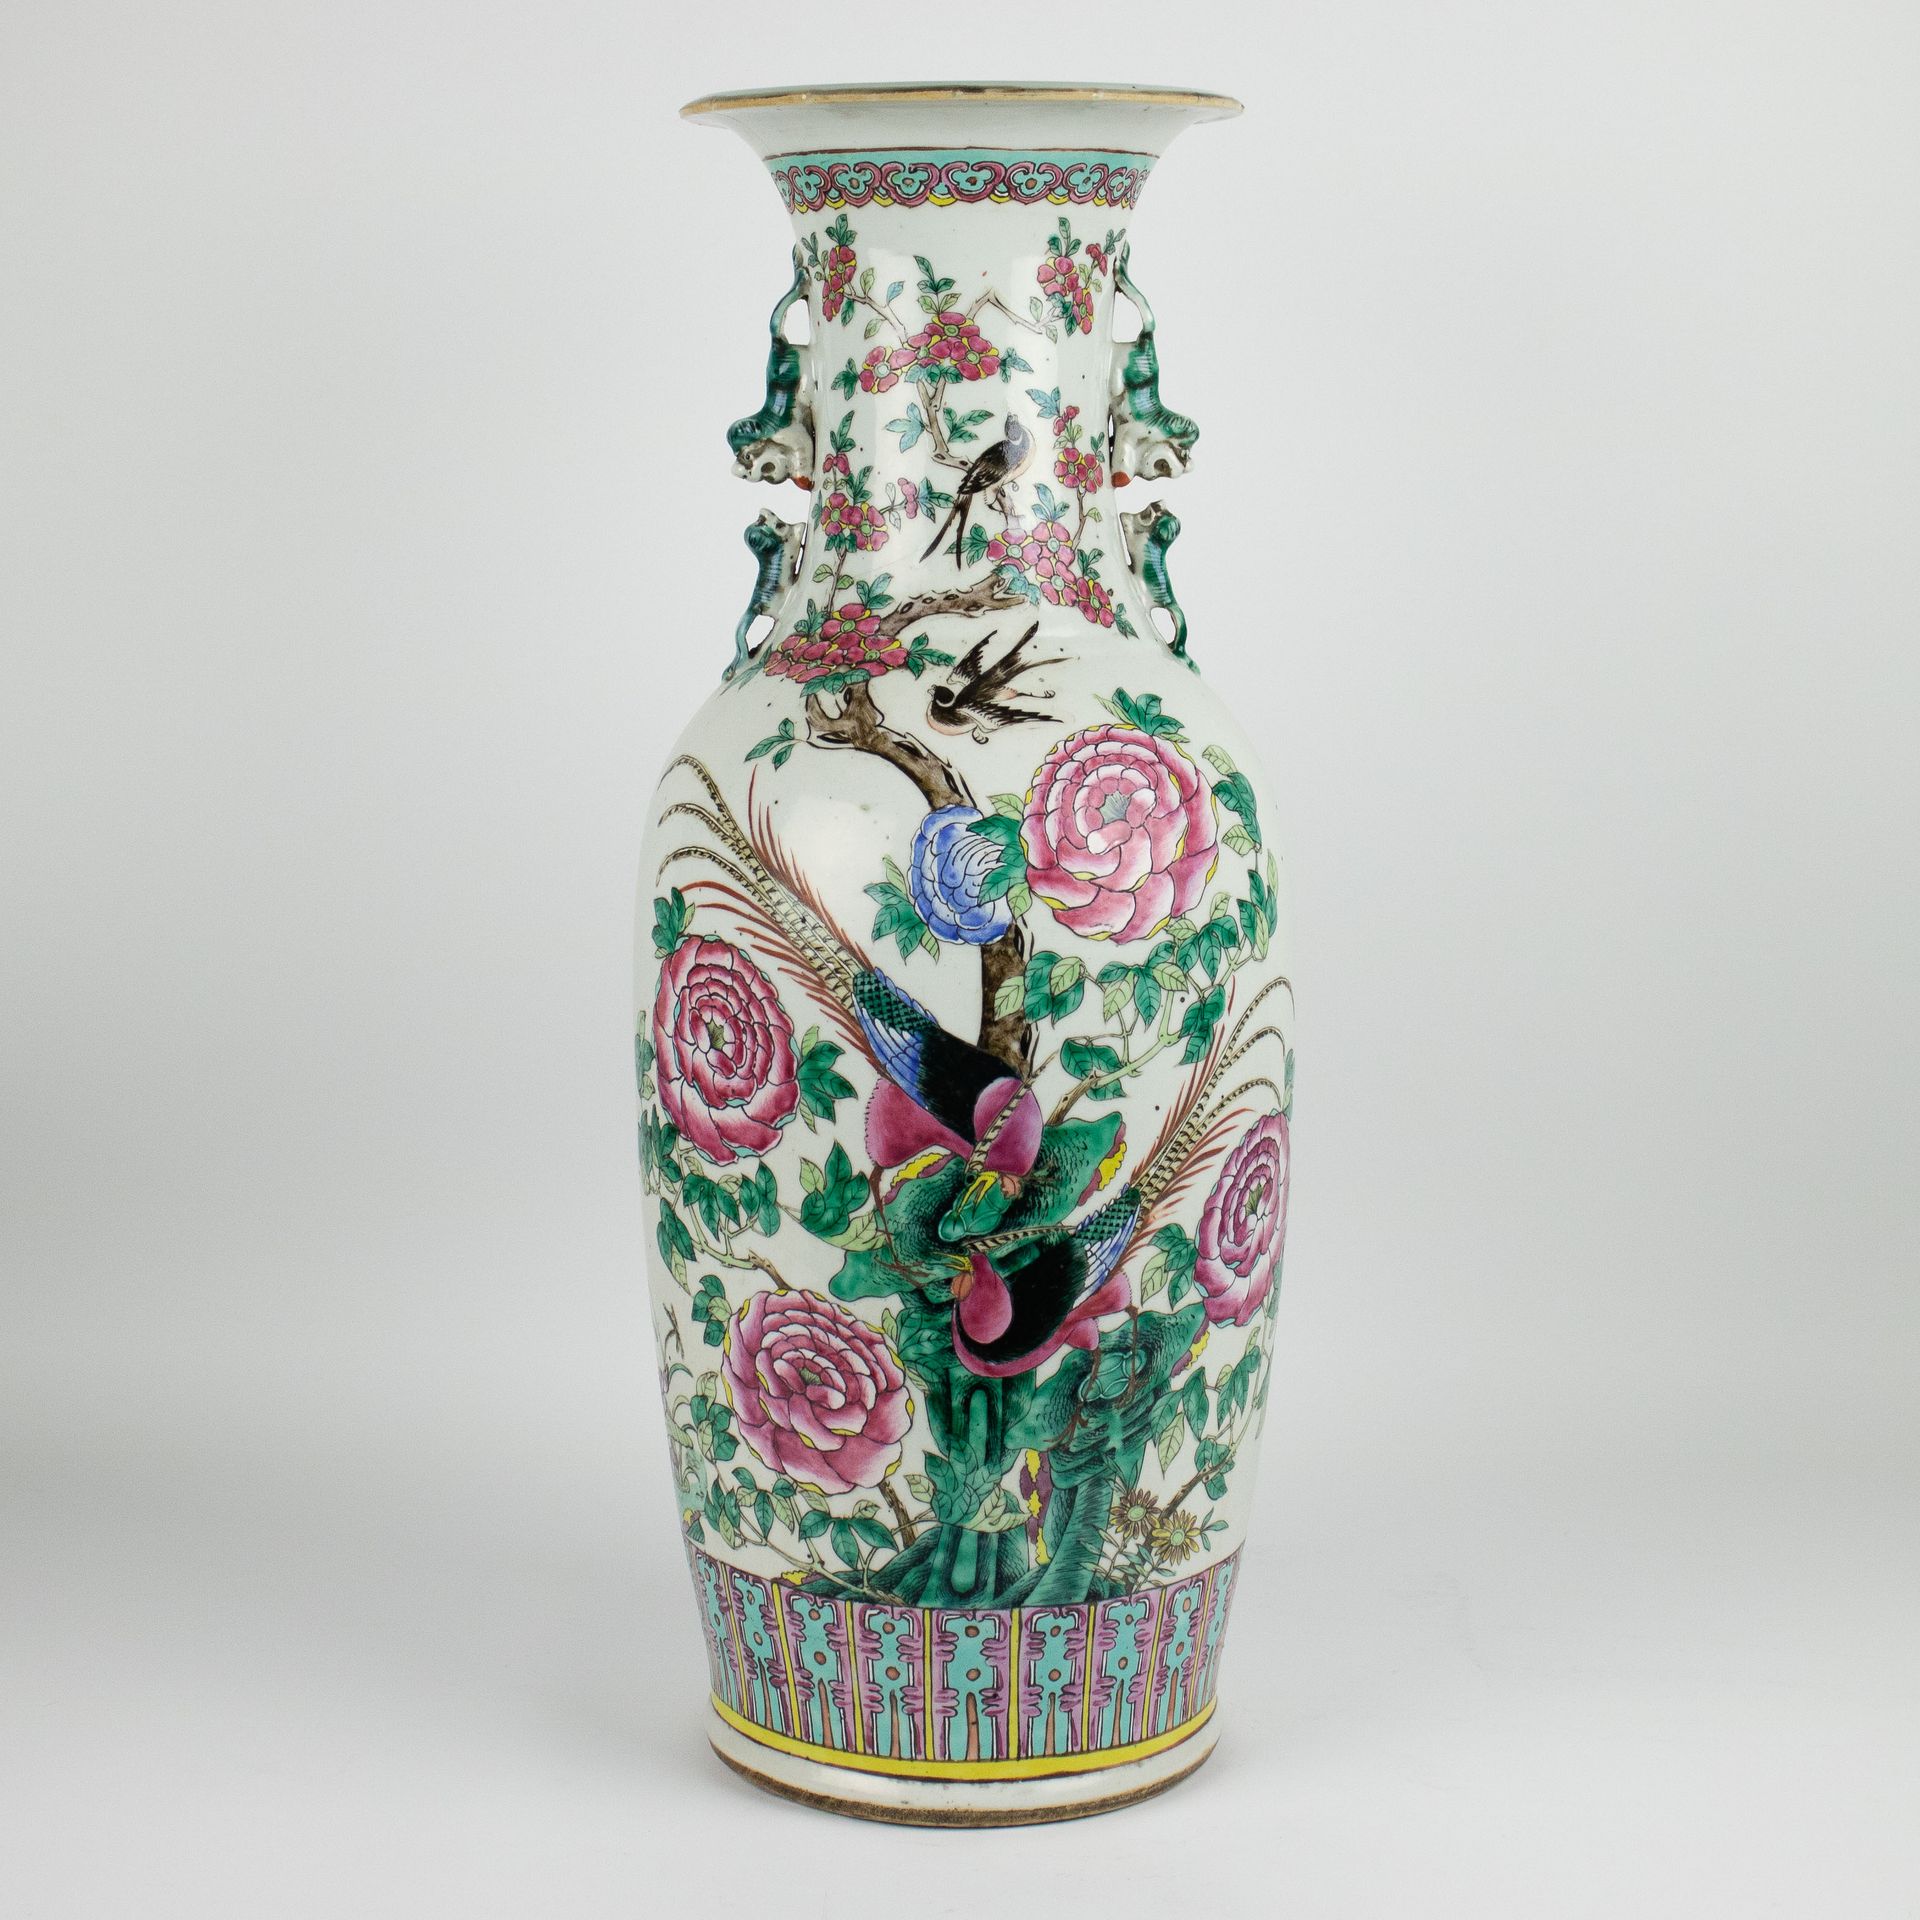 A Chinese vase 2nd half 19th century 装饰5对鸟，代表儒家思想中的5种基本关系。19世纪的中国人。
高62厘米。5对鸟代表了&hellip;